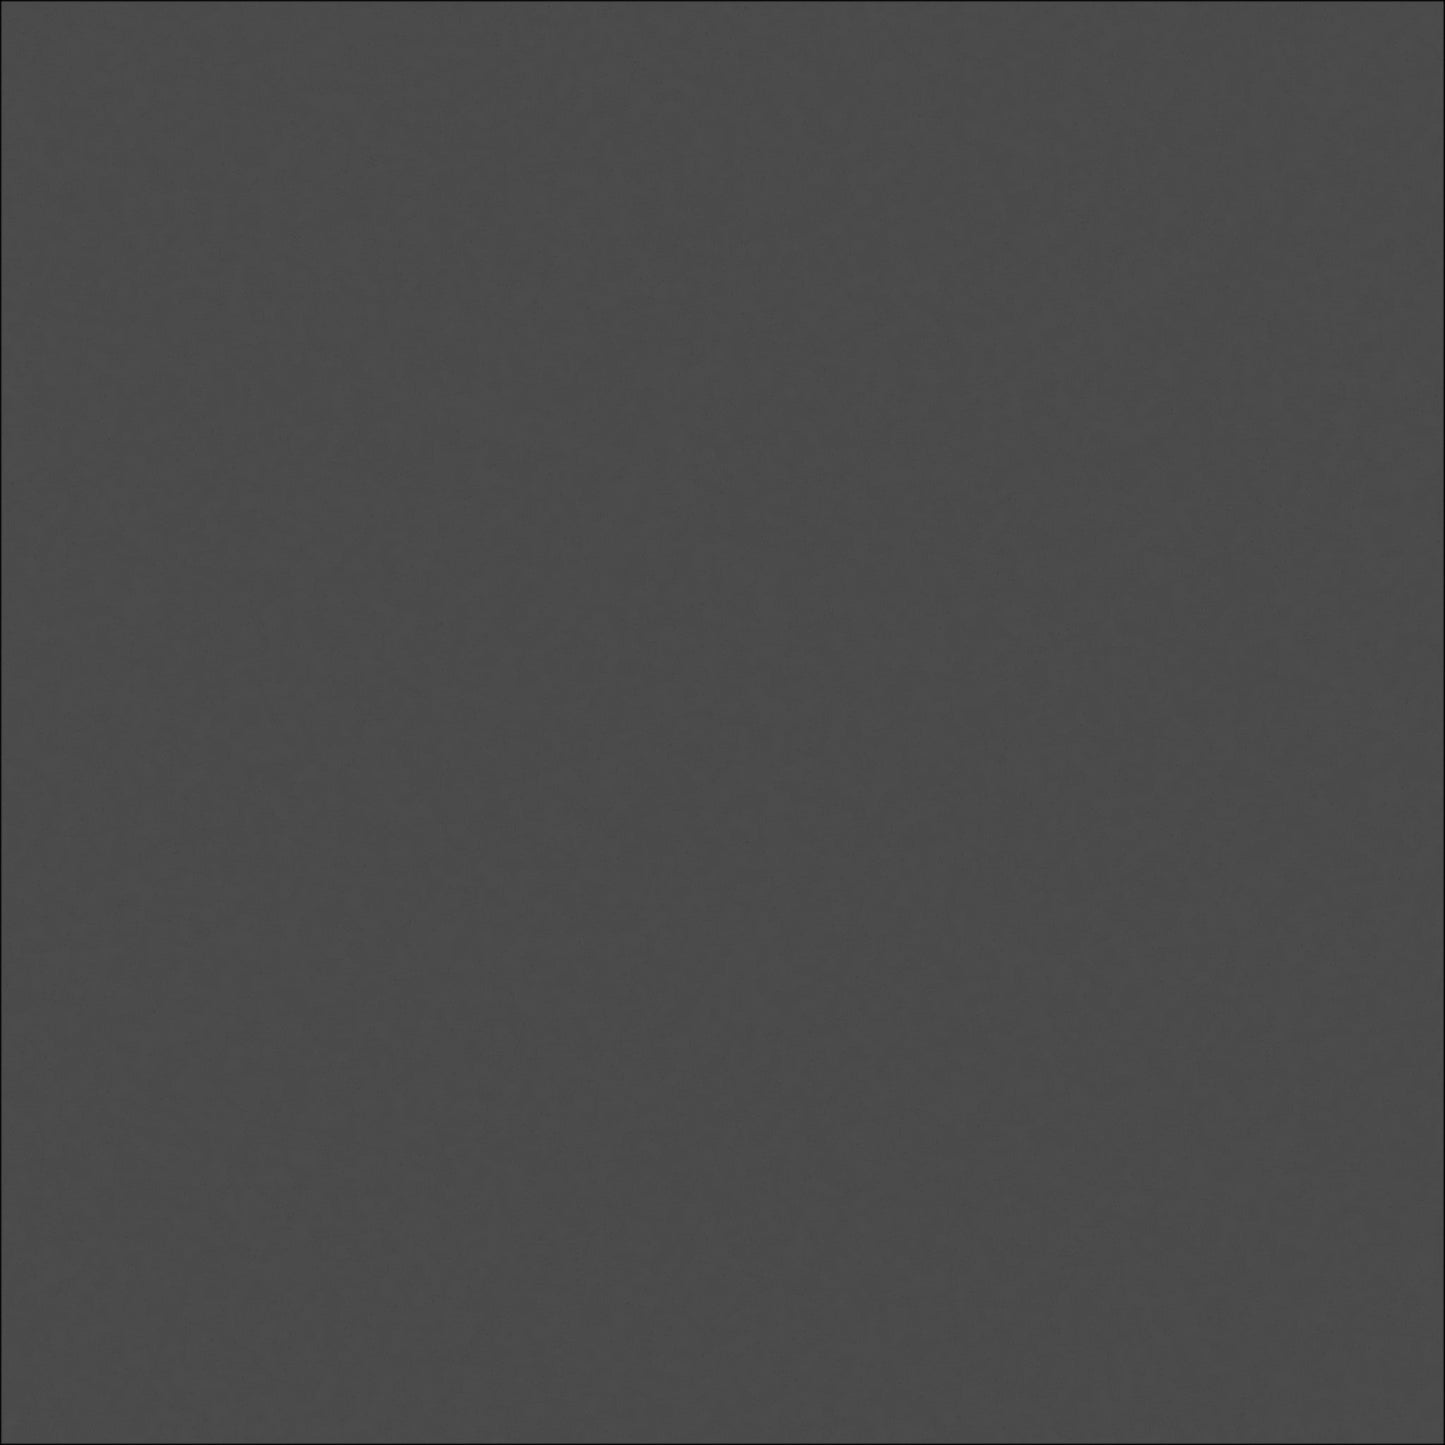 Powder-coated Metal: Black, RAL 9005, Gloss 5-10